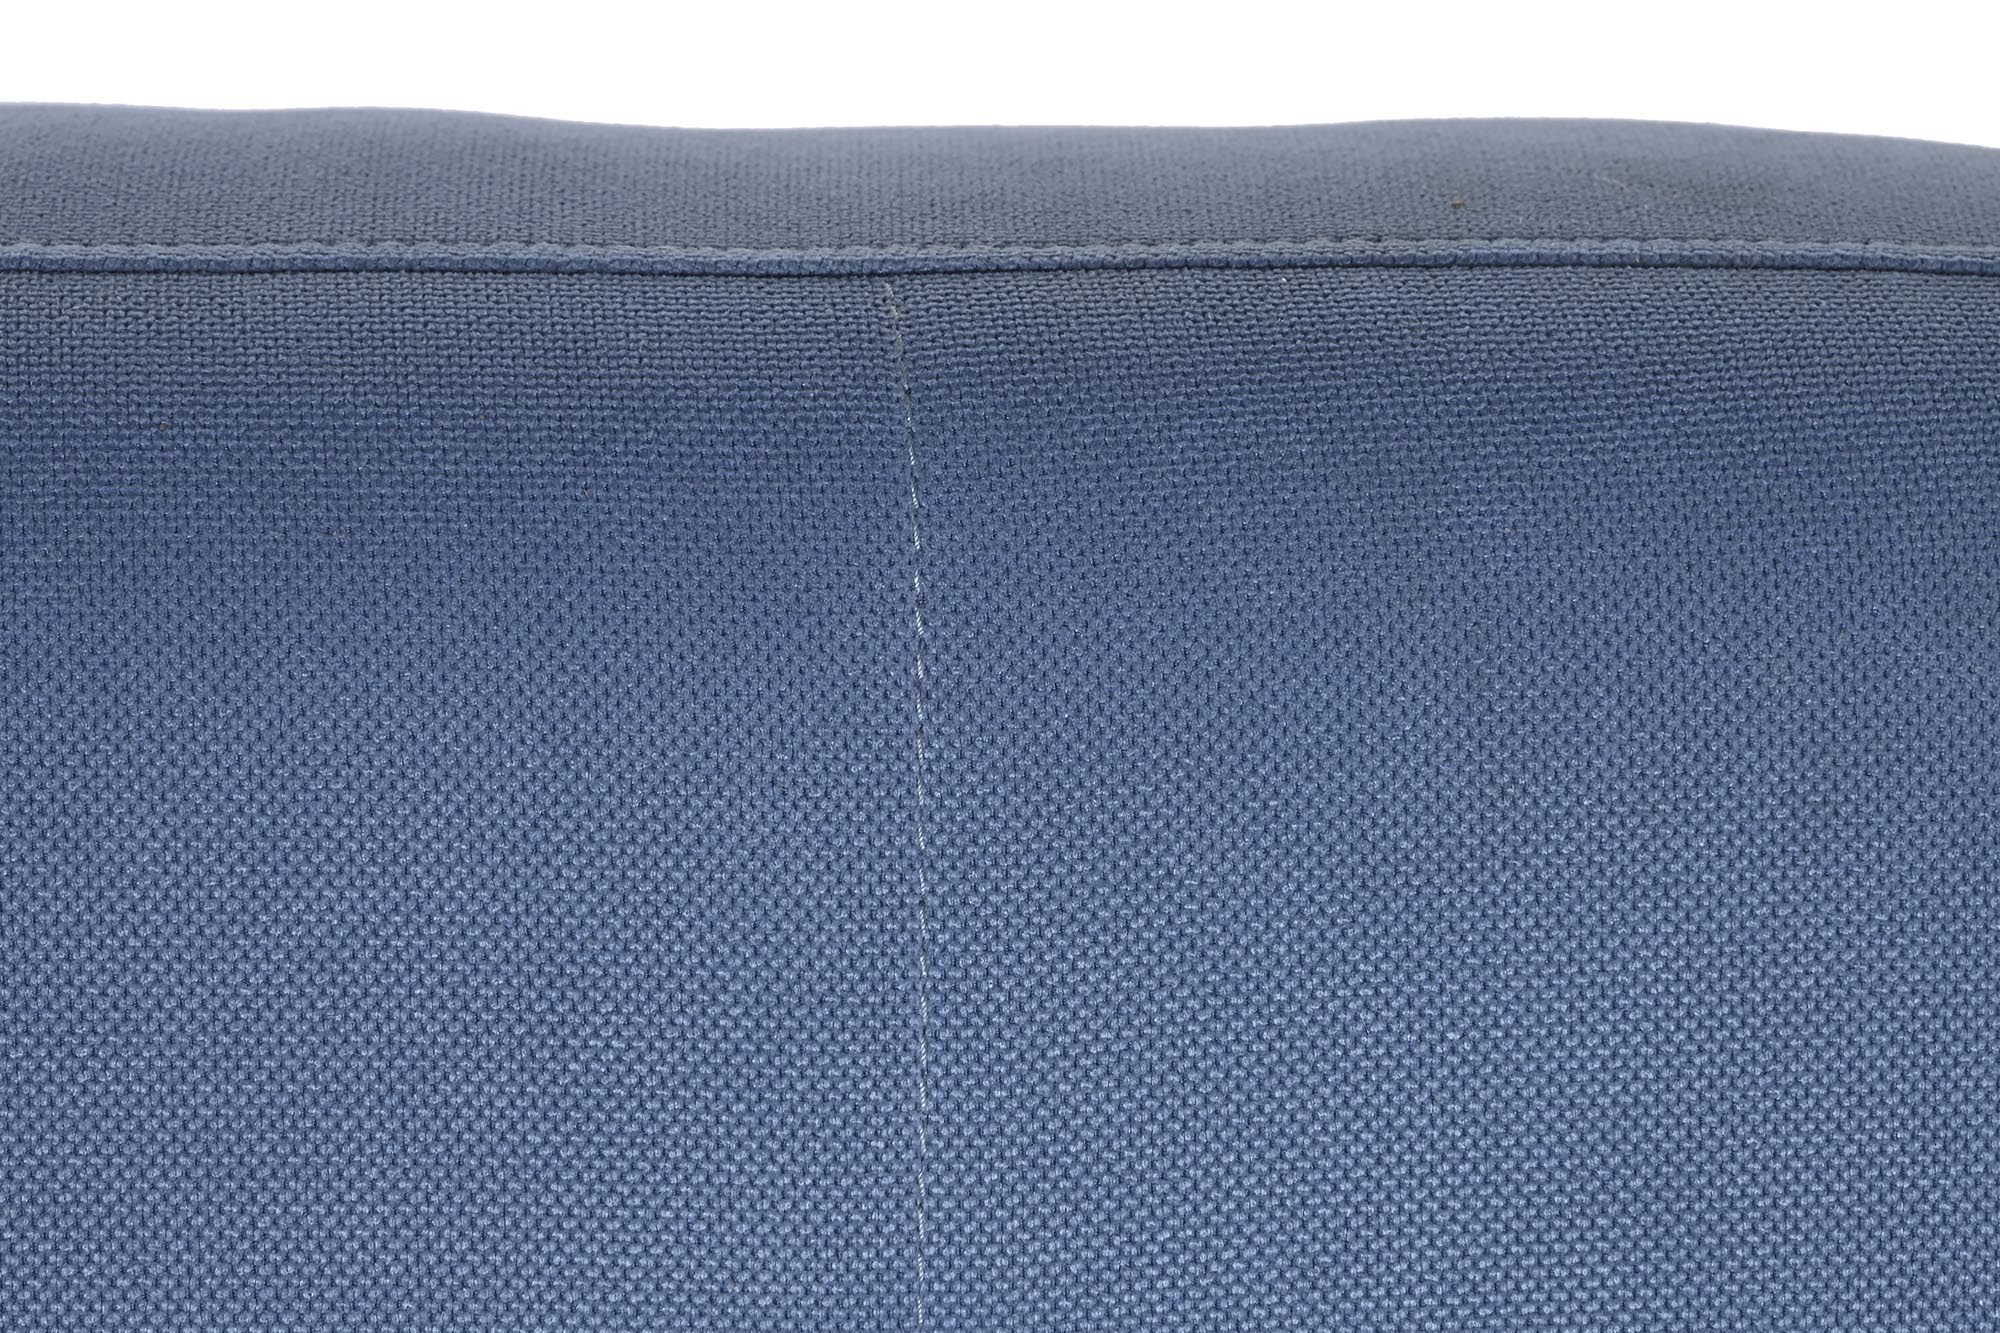 Sofa cama eucalipto metal 203x87x81 azul